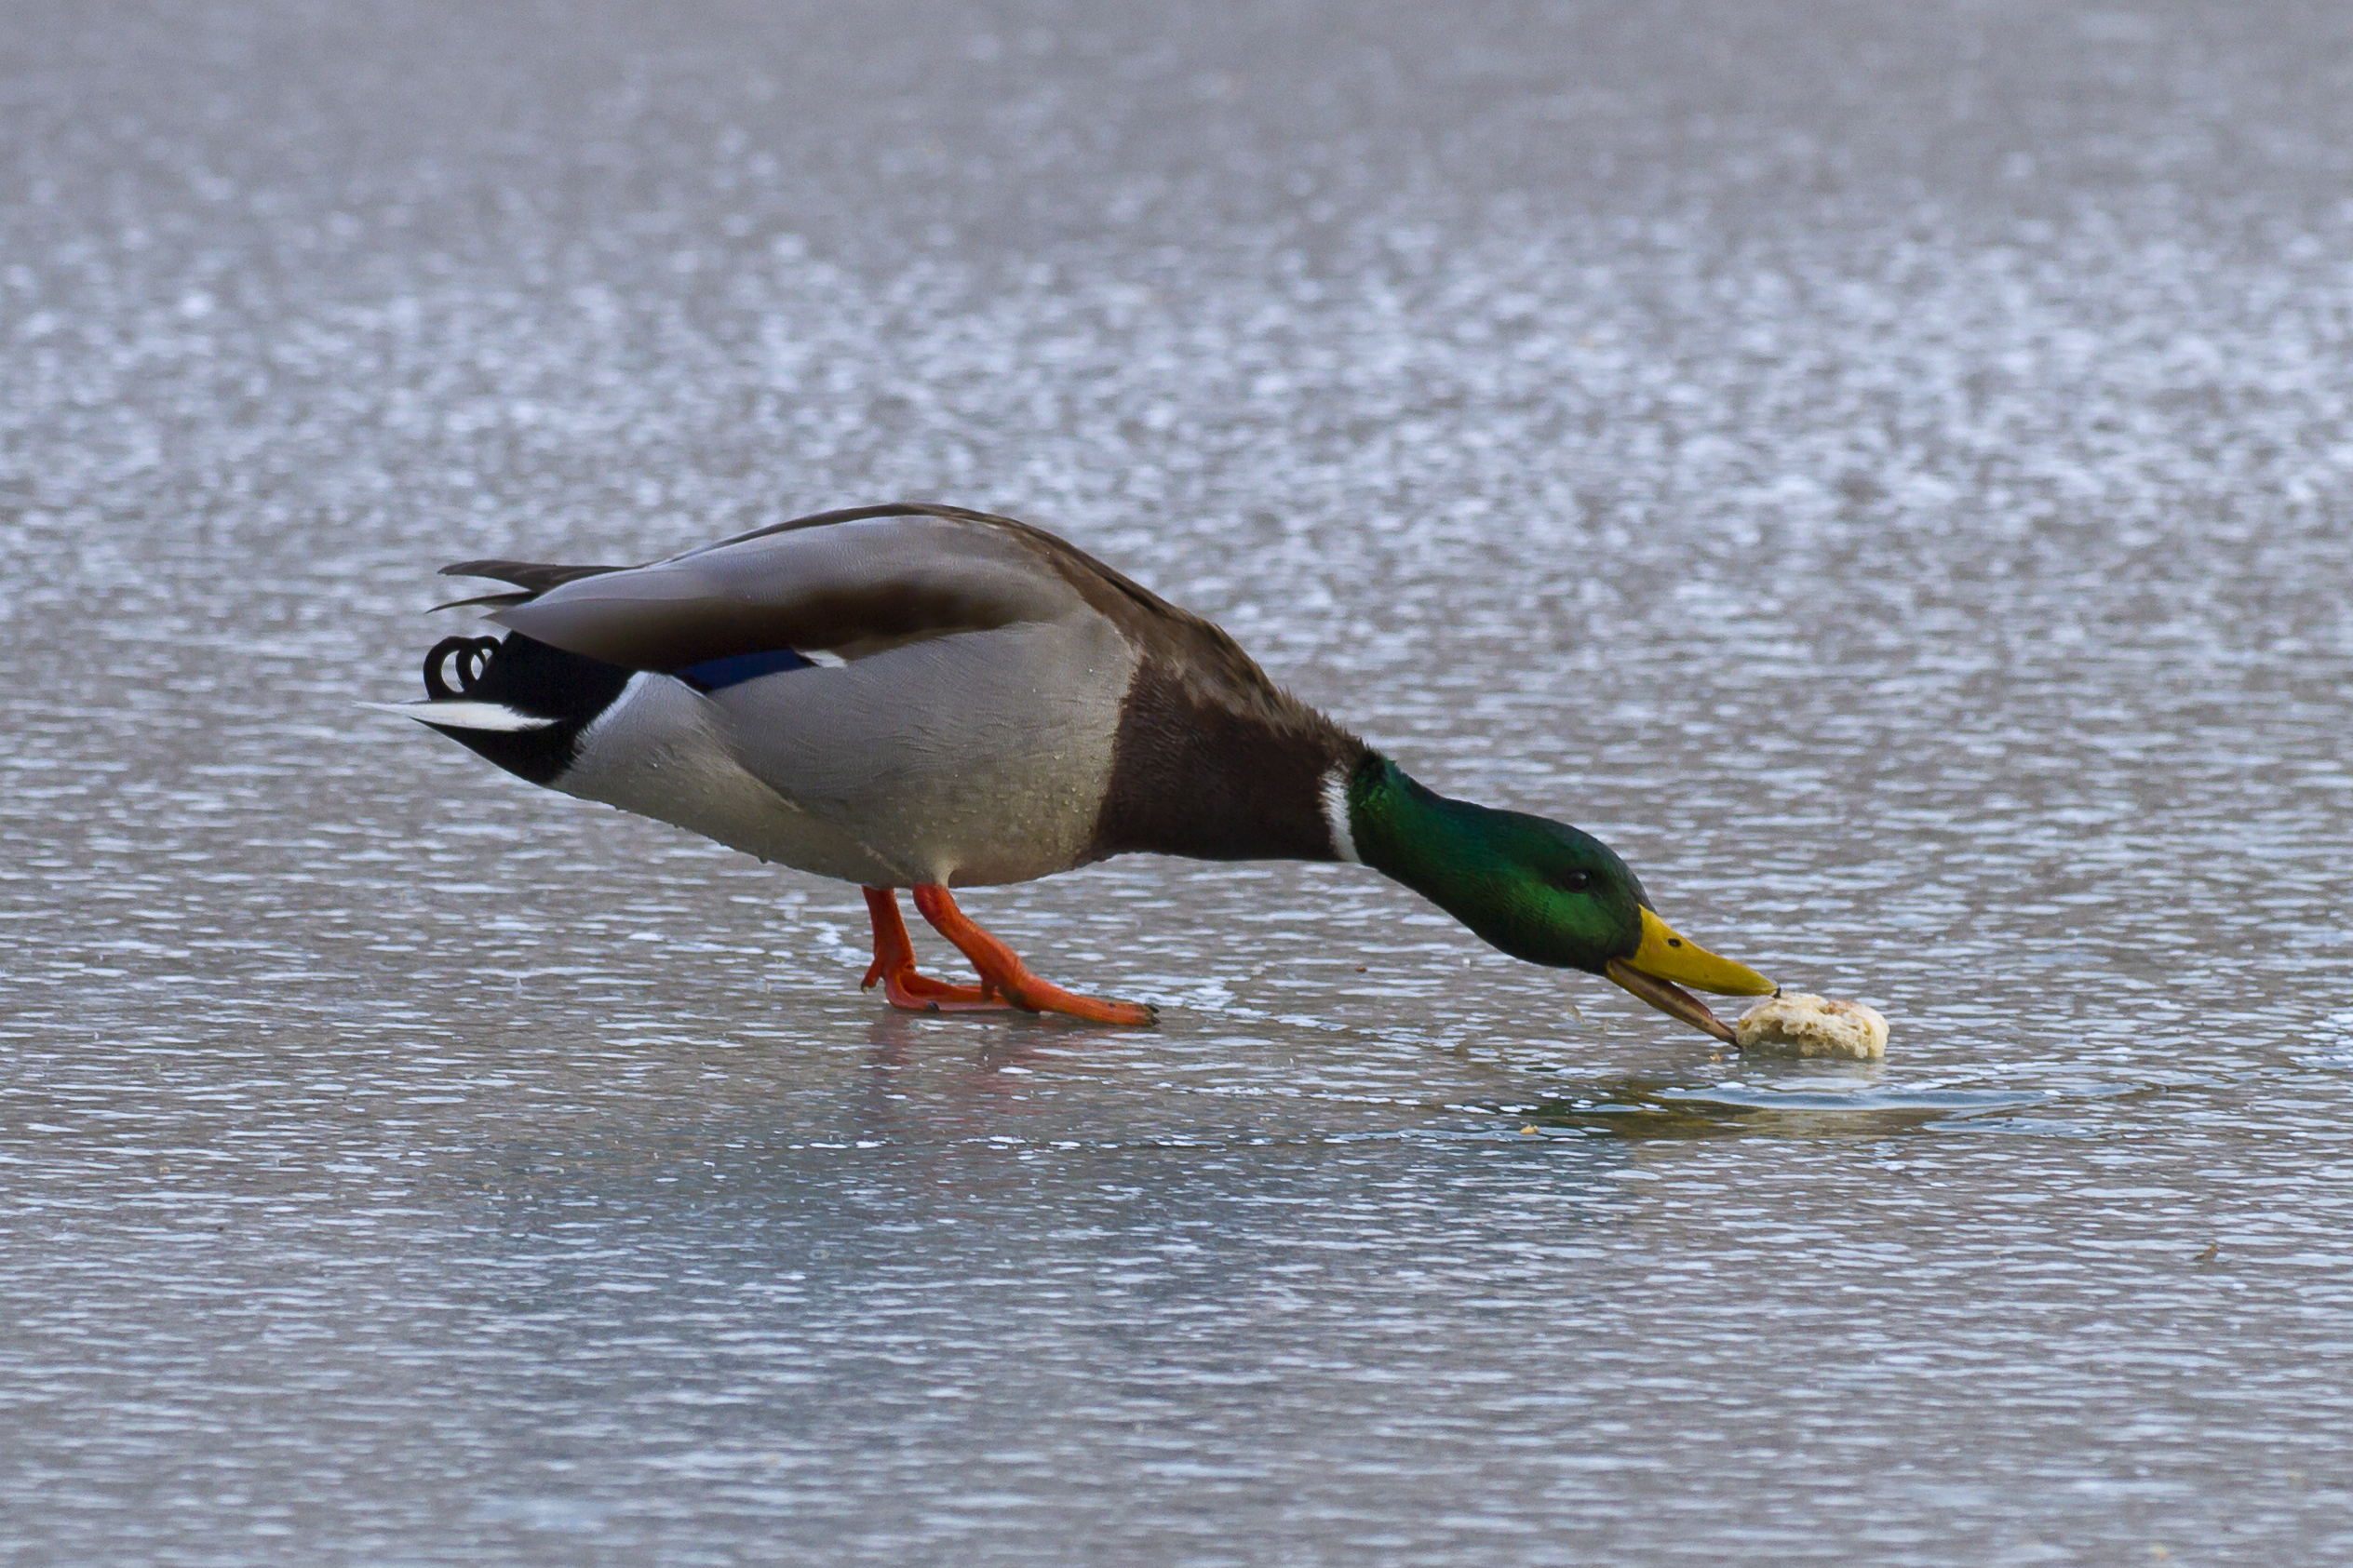 Mallard duck eating bread